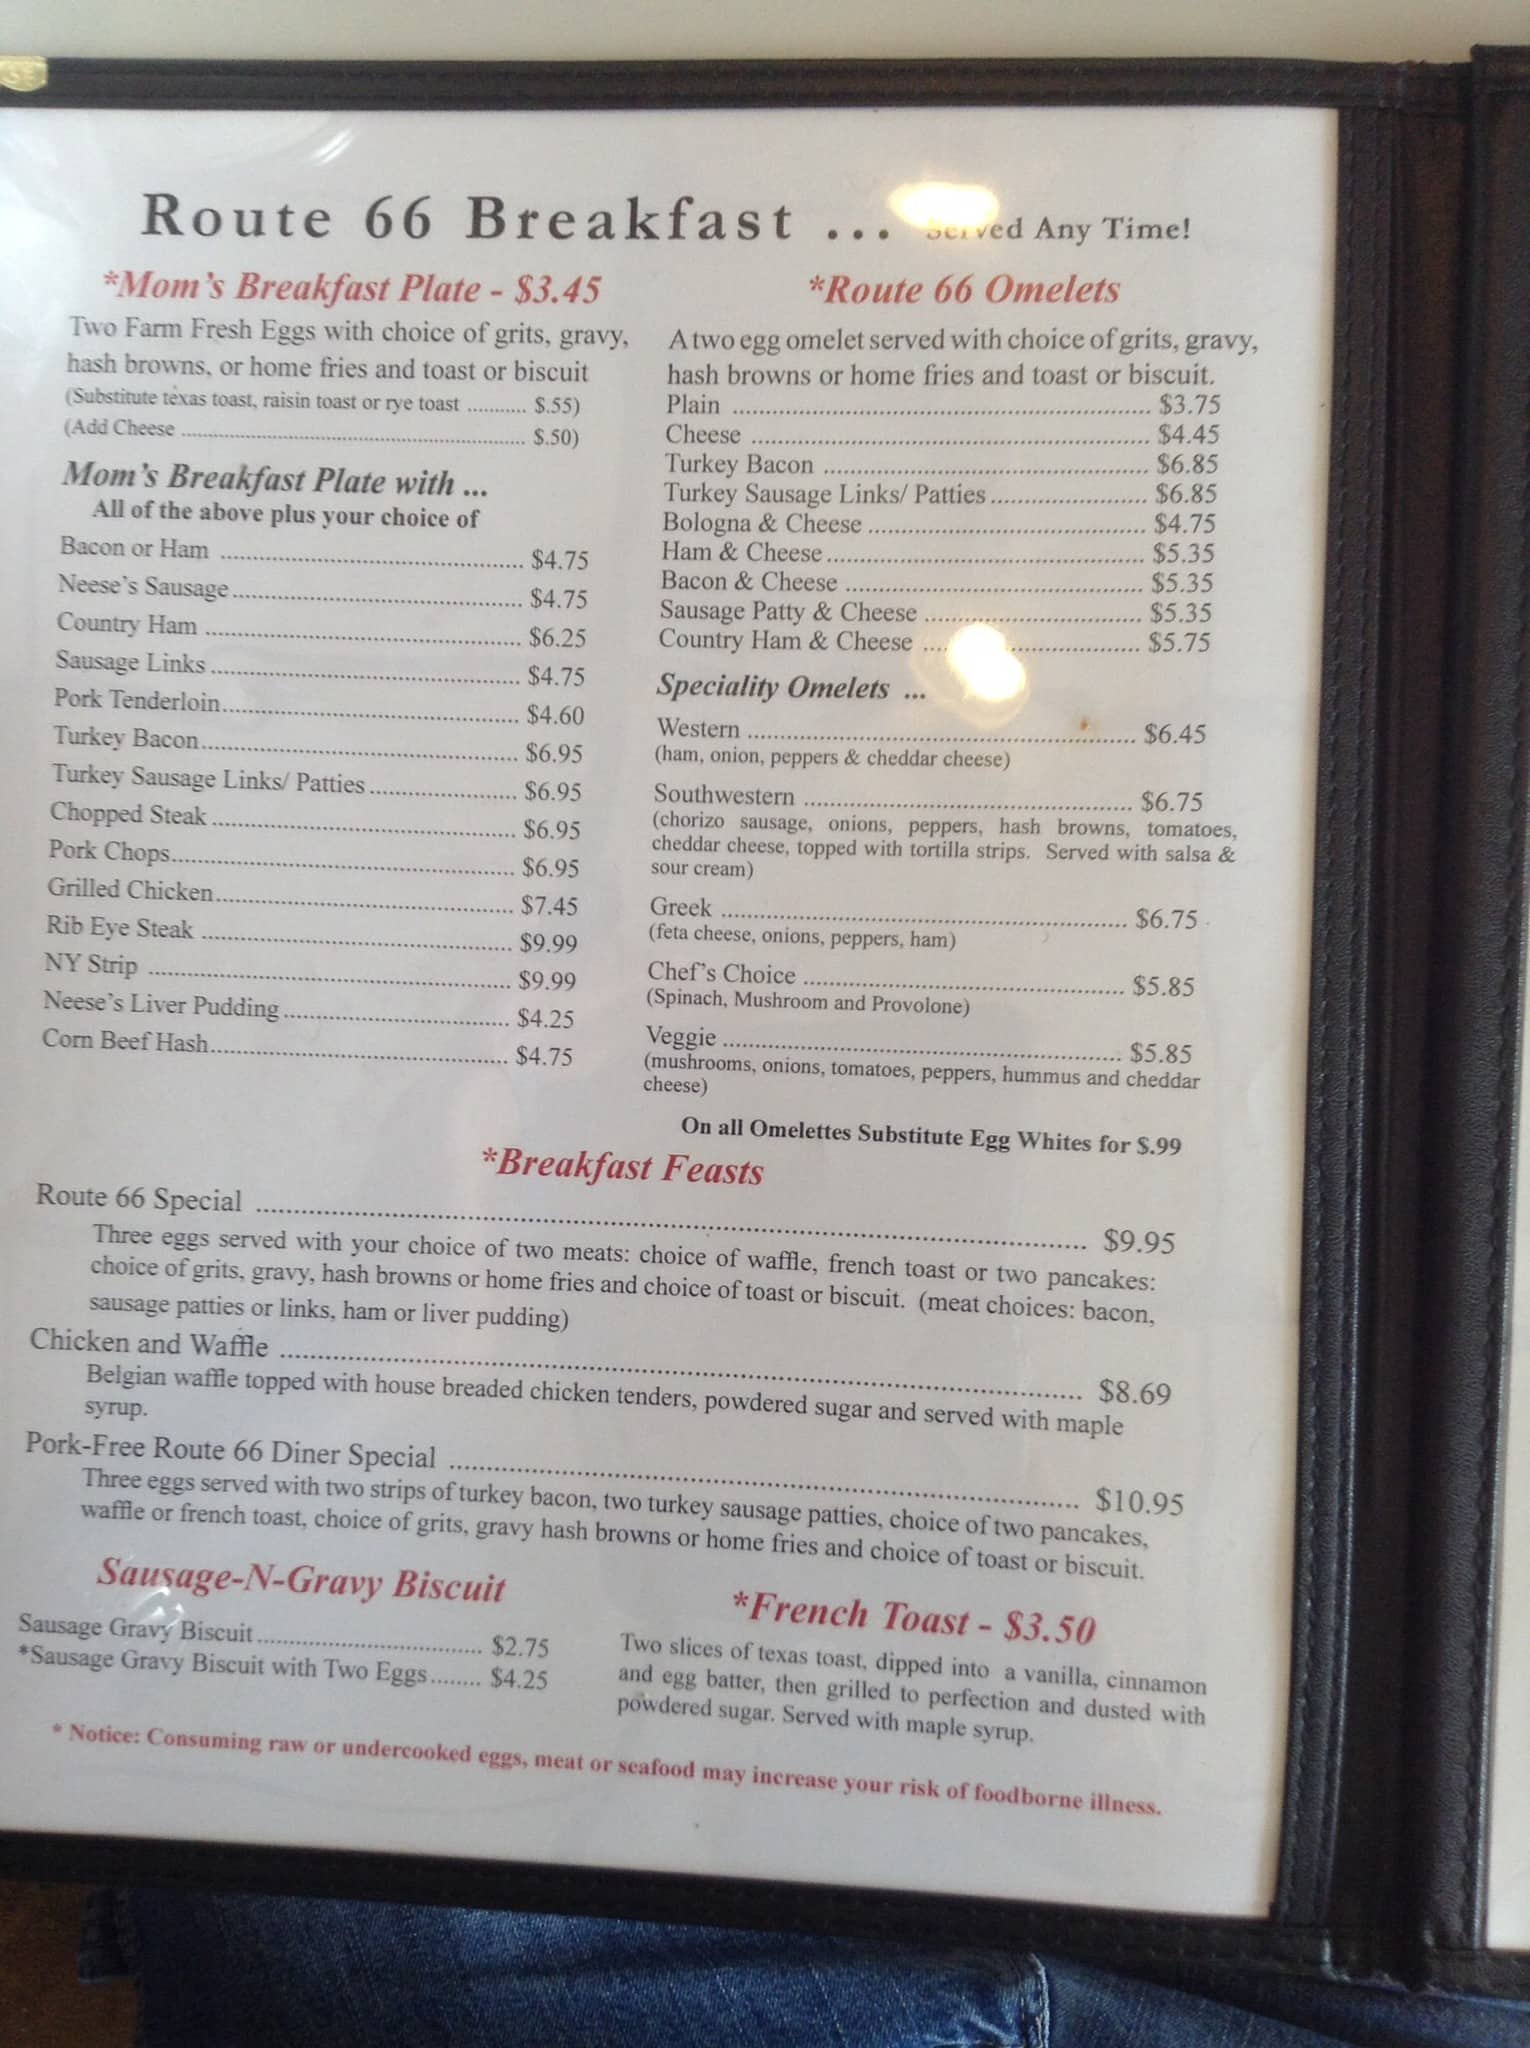 kernersville's route 66 diner menu - urbanspoon/zomato